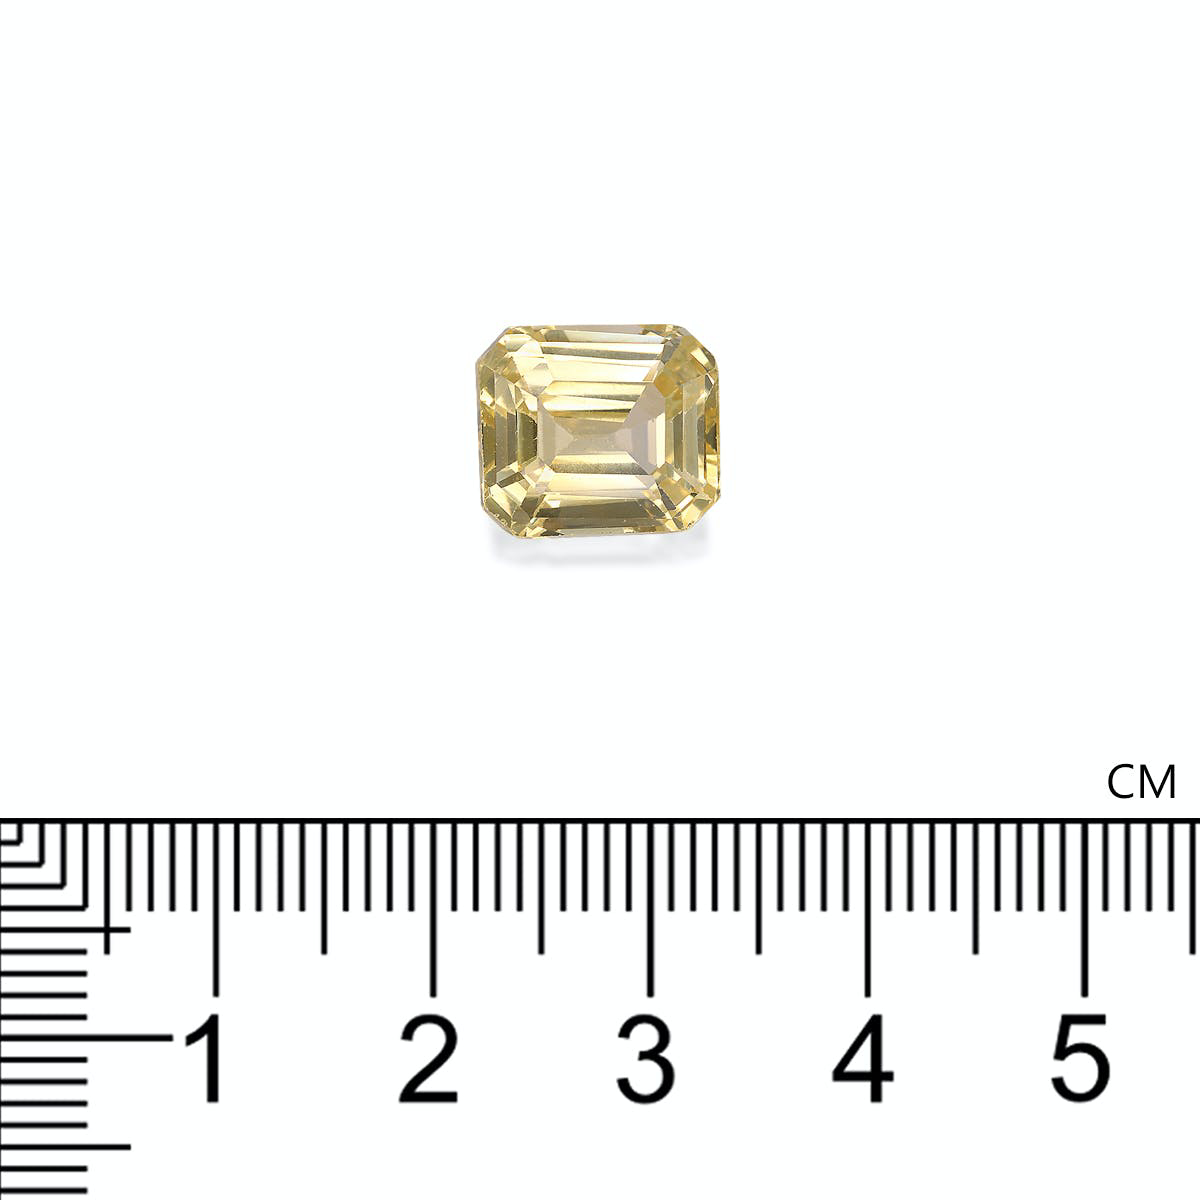 Picture of Yellow Sapphire Unheated Sri Lanka 8.01ct - 11x9mm (YS0030)